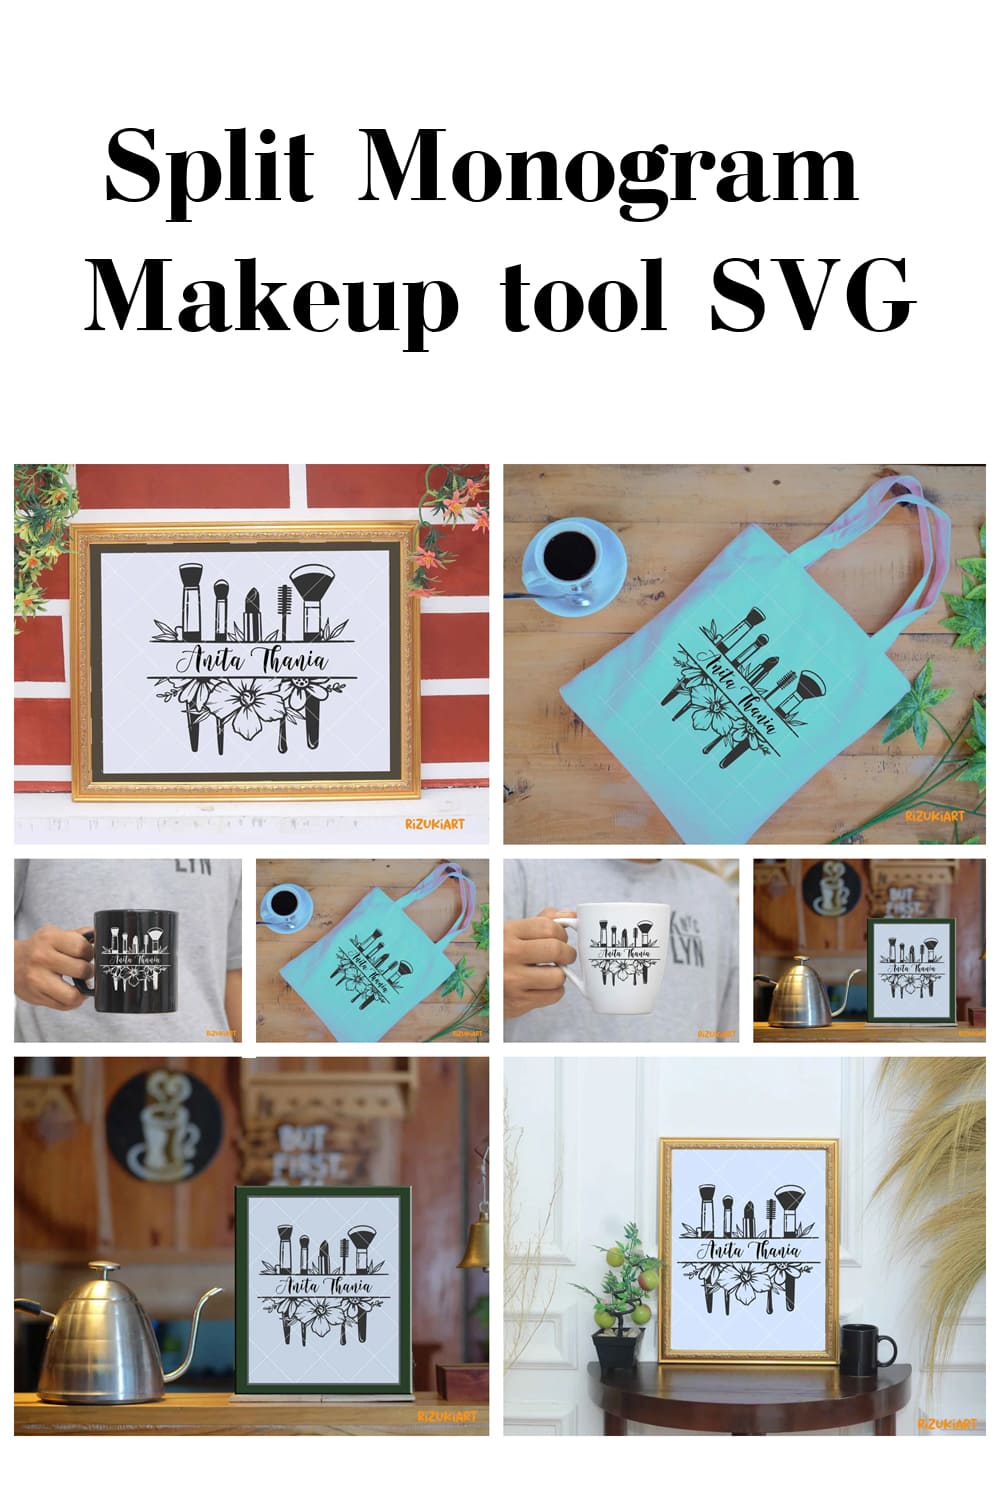 split monogram makeup tool svg illustration.